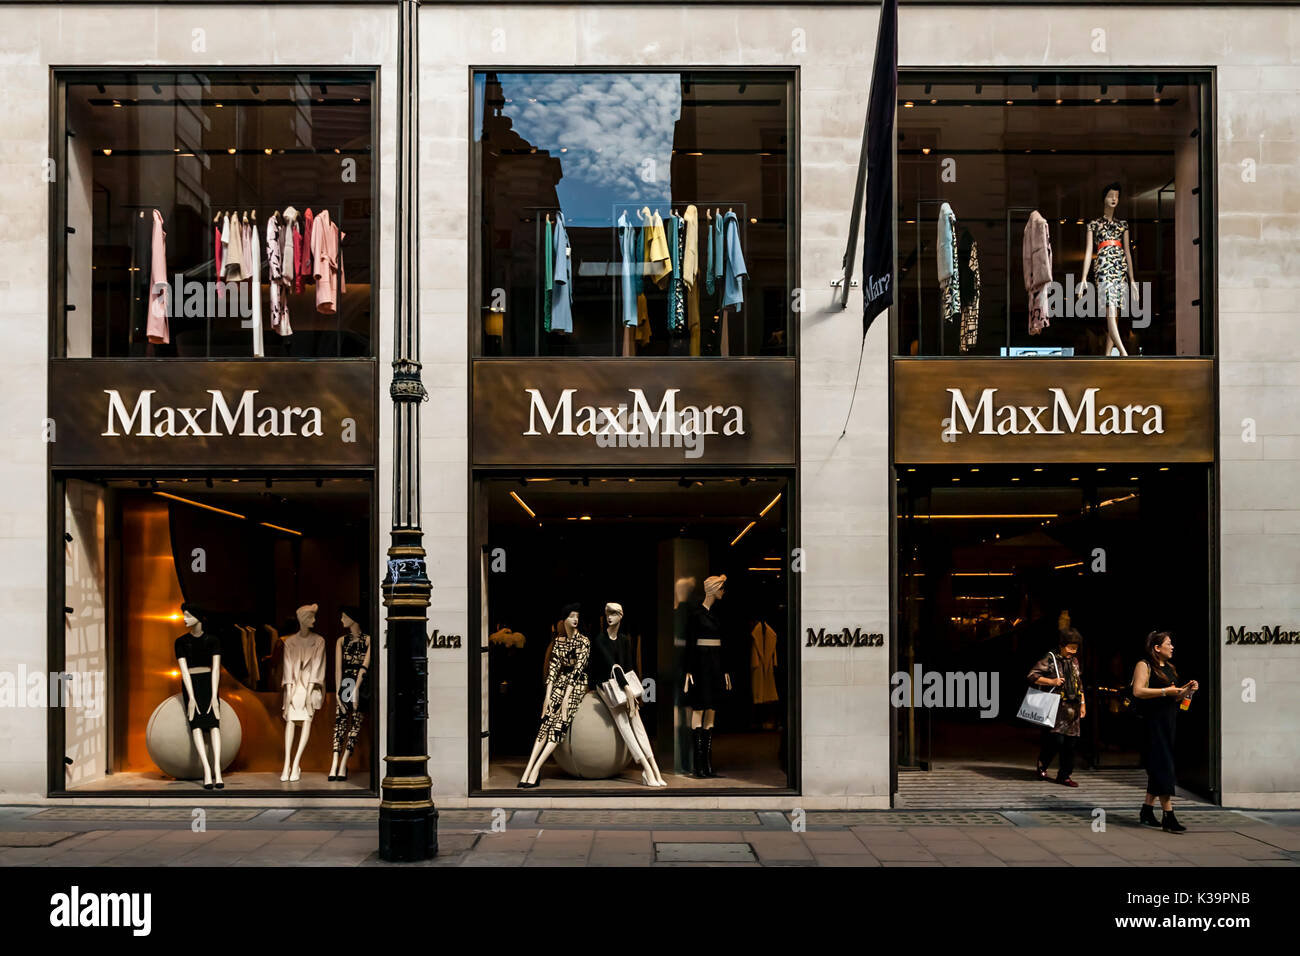 MaxMara Bekleidungsgeschäft, Old Bond Street, London, UK Stockfotografie -  Alamy